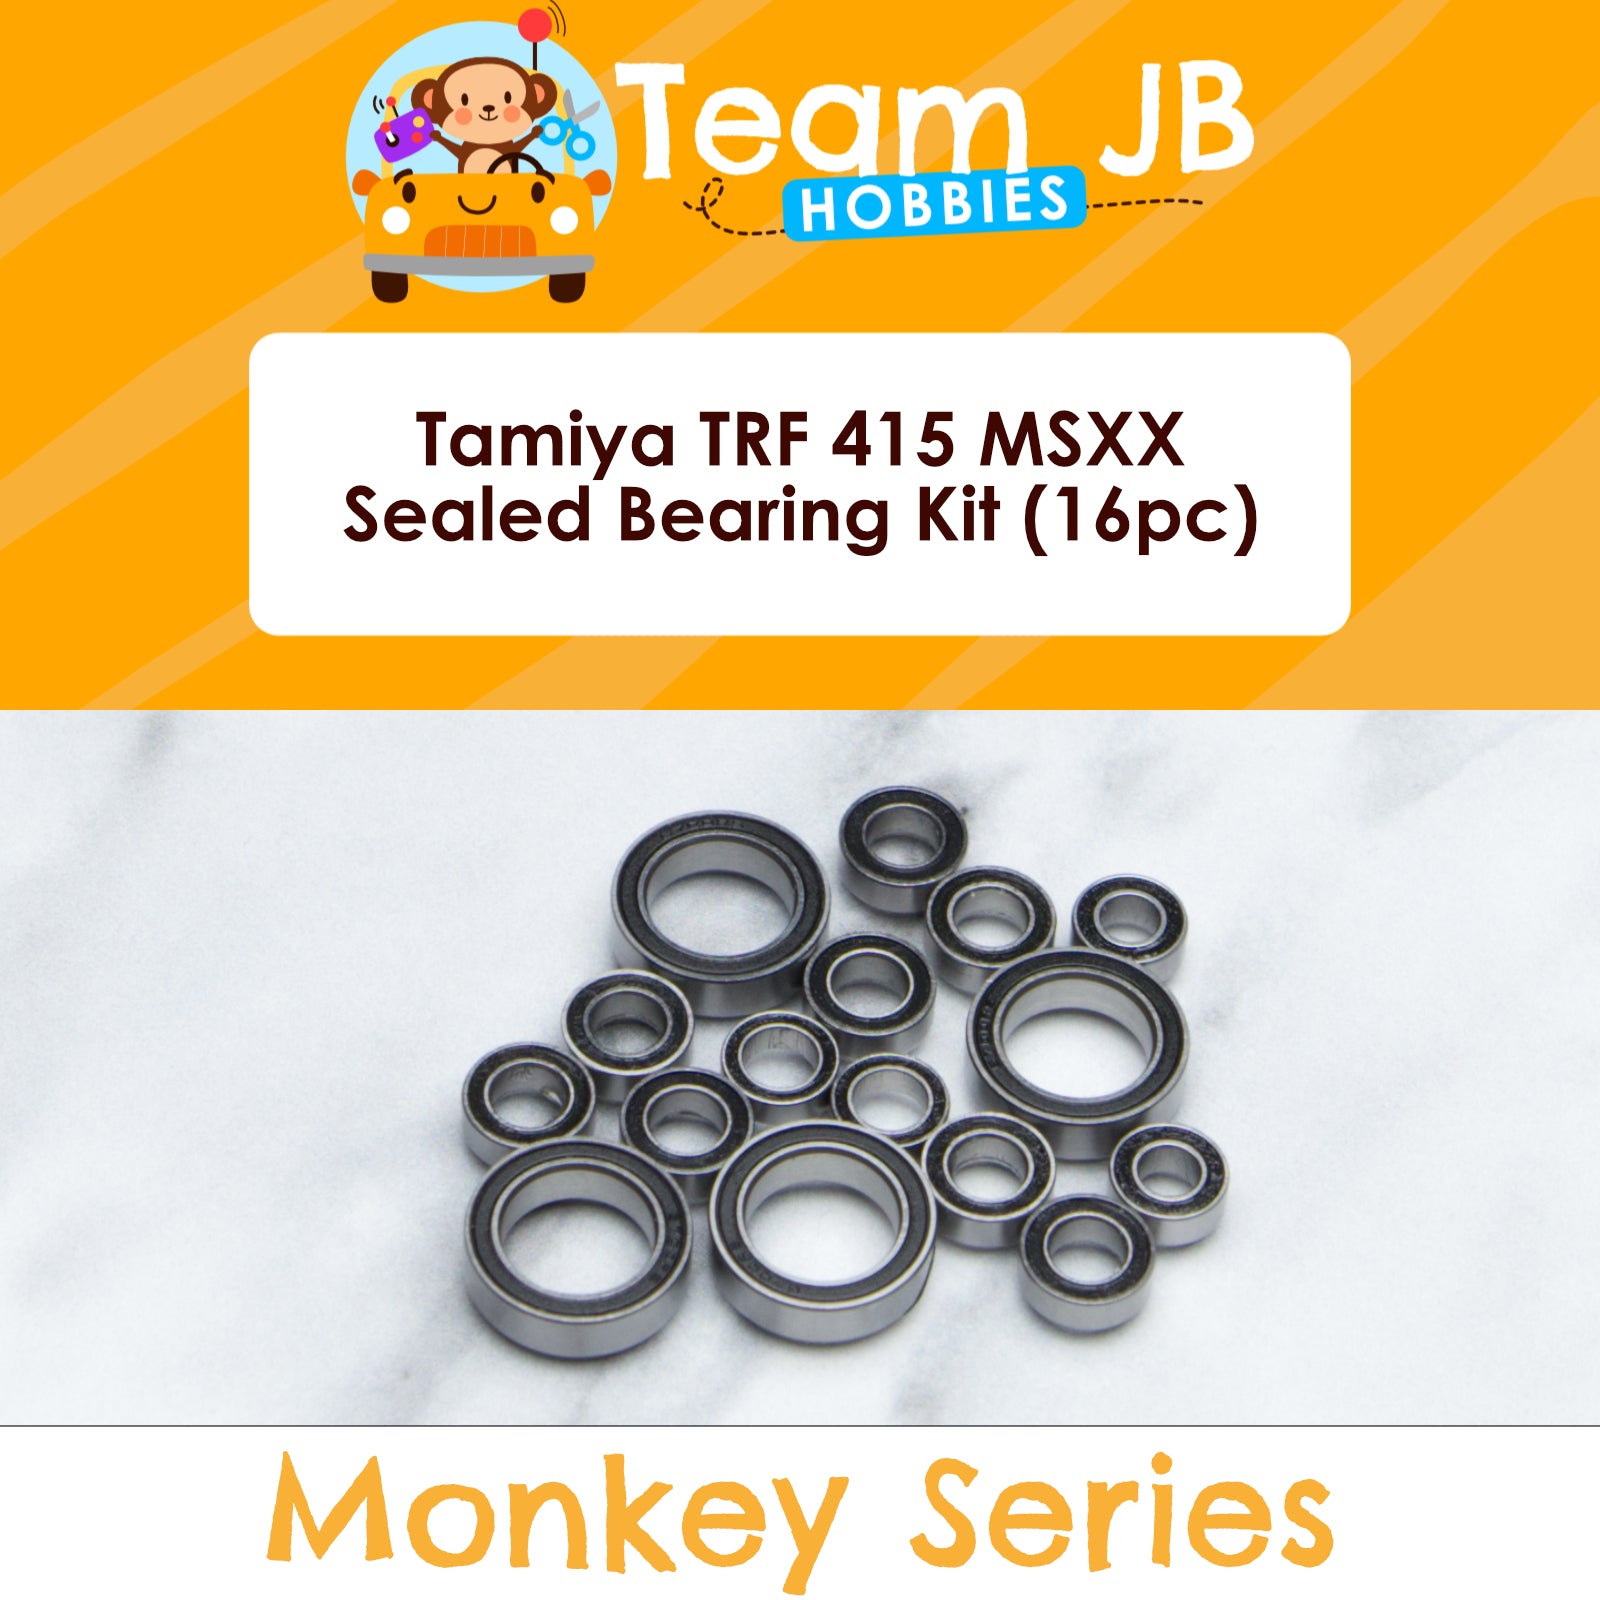 Tamiya TRF 415 MSXX - Sealed Bearing Kit